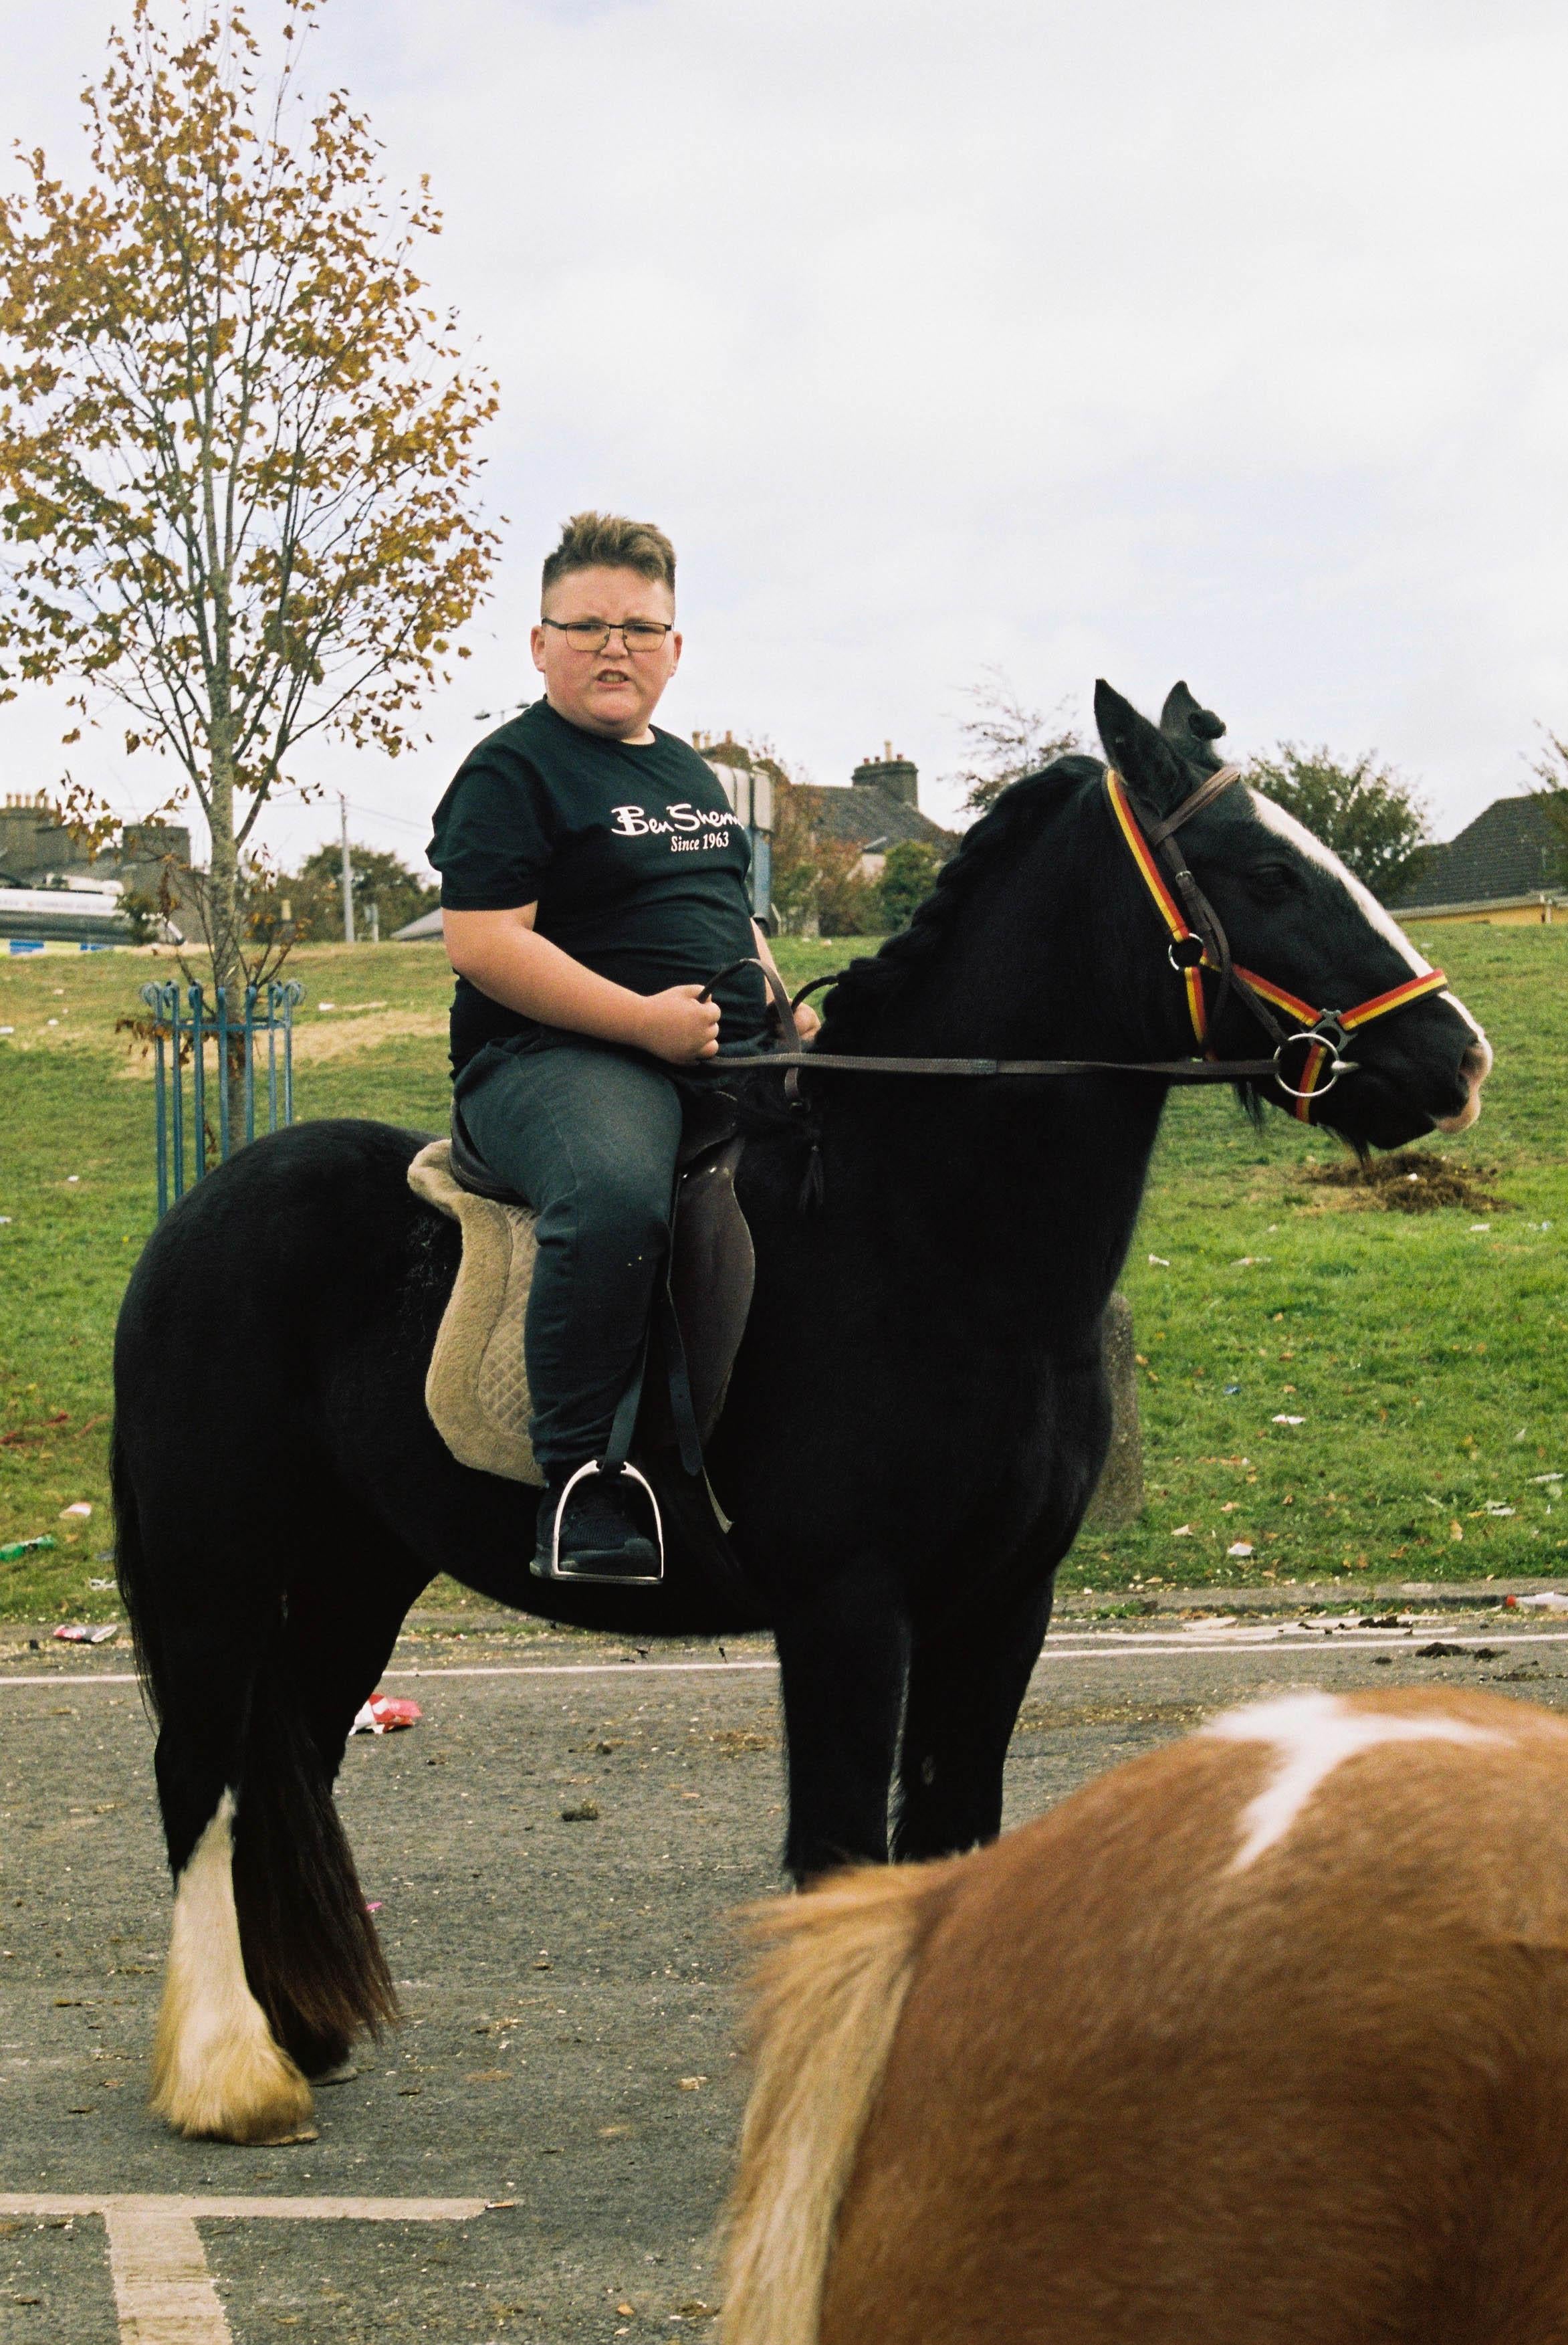 Marion Bergin Animal Print - Irish Traveller Boy and Horse - Ballinasloe Horse Fair, Ireland, 2018